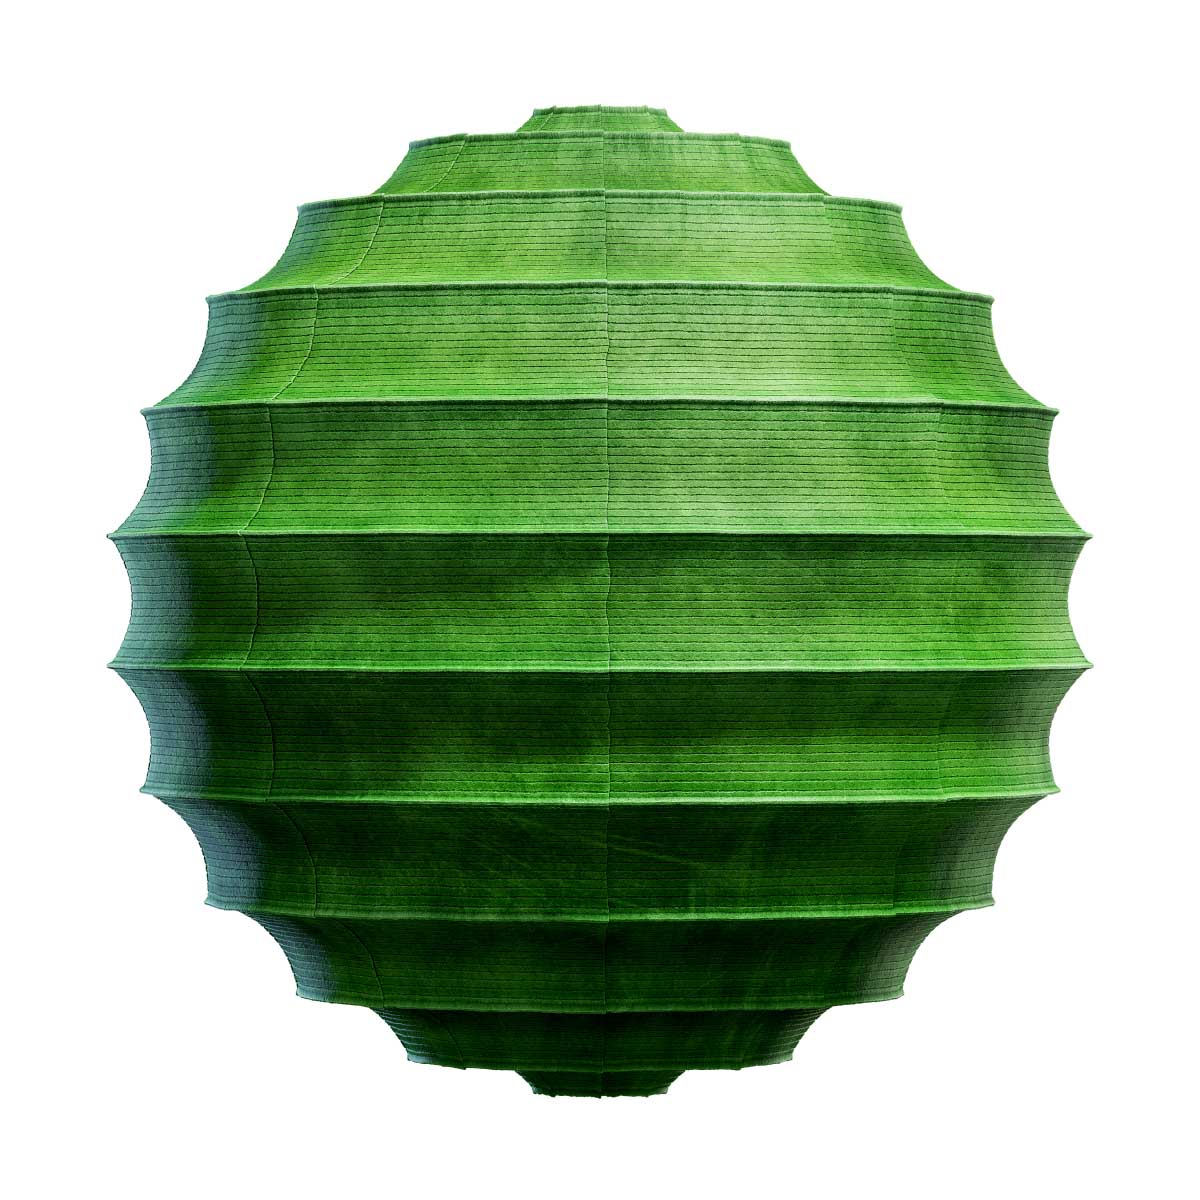 Green Paper Lantern PBR Texture